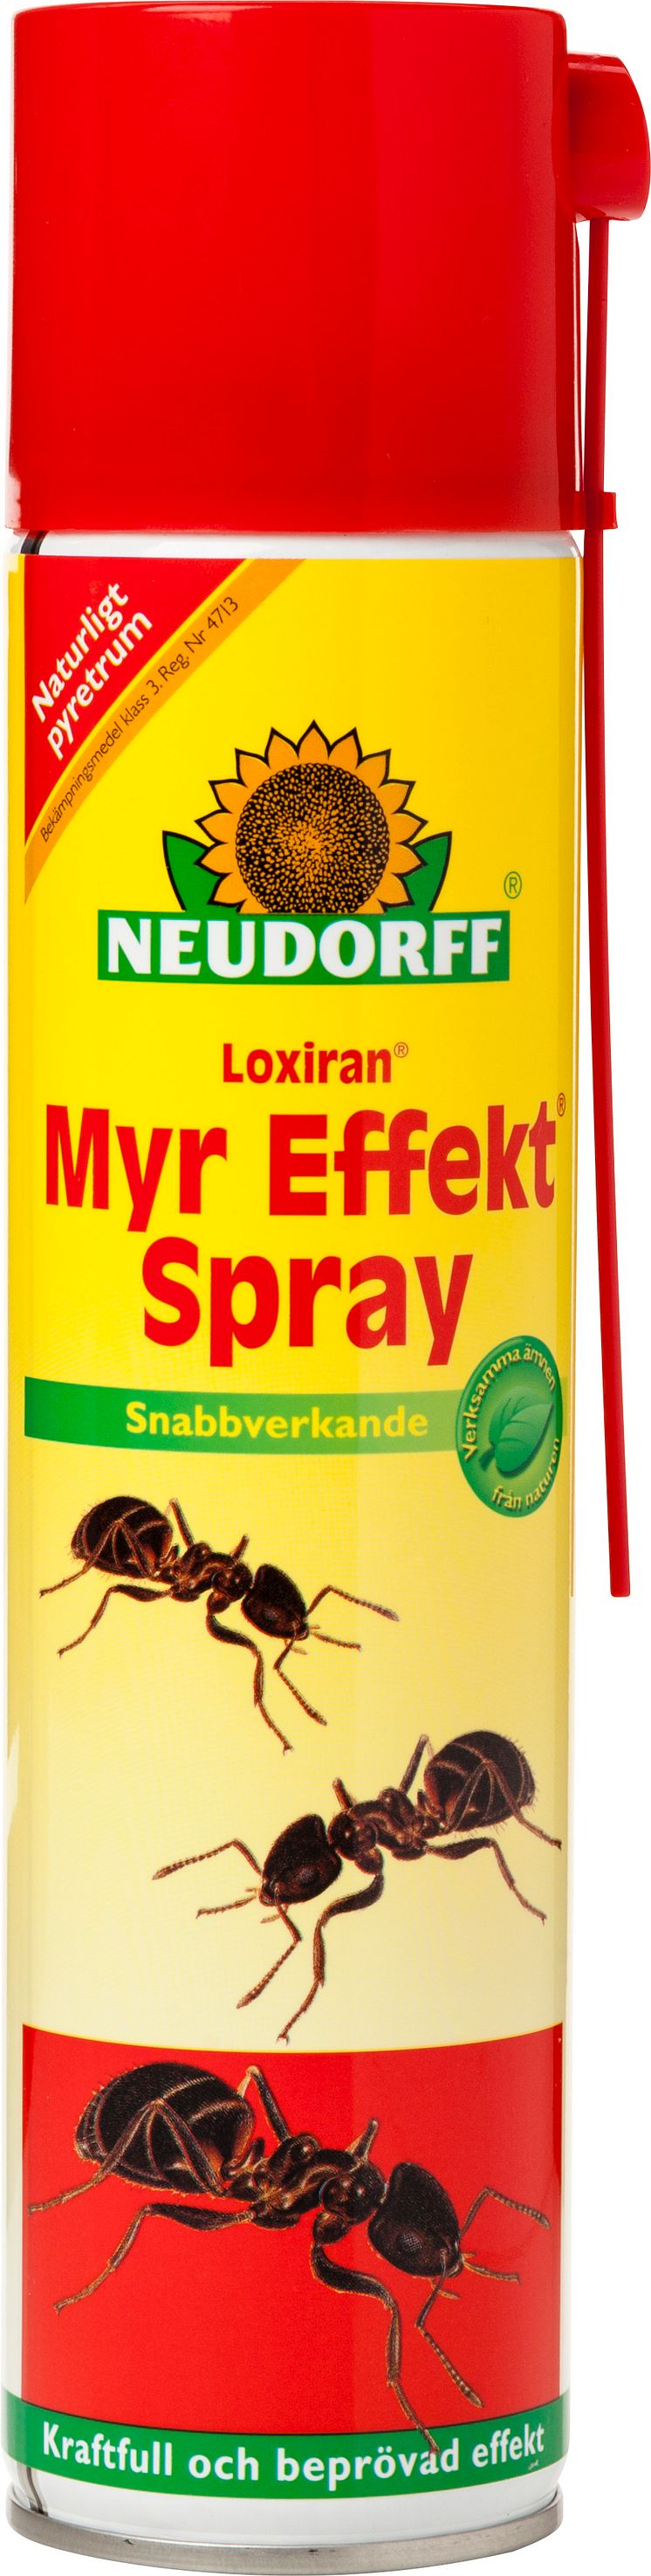 Myr Effekt Spray - Neudorff